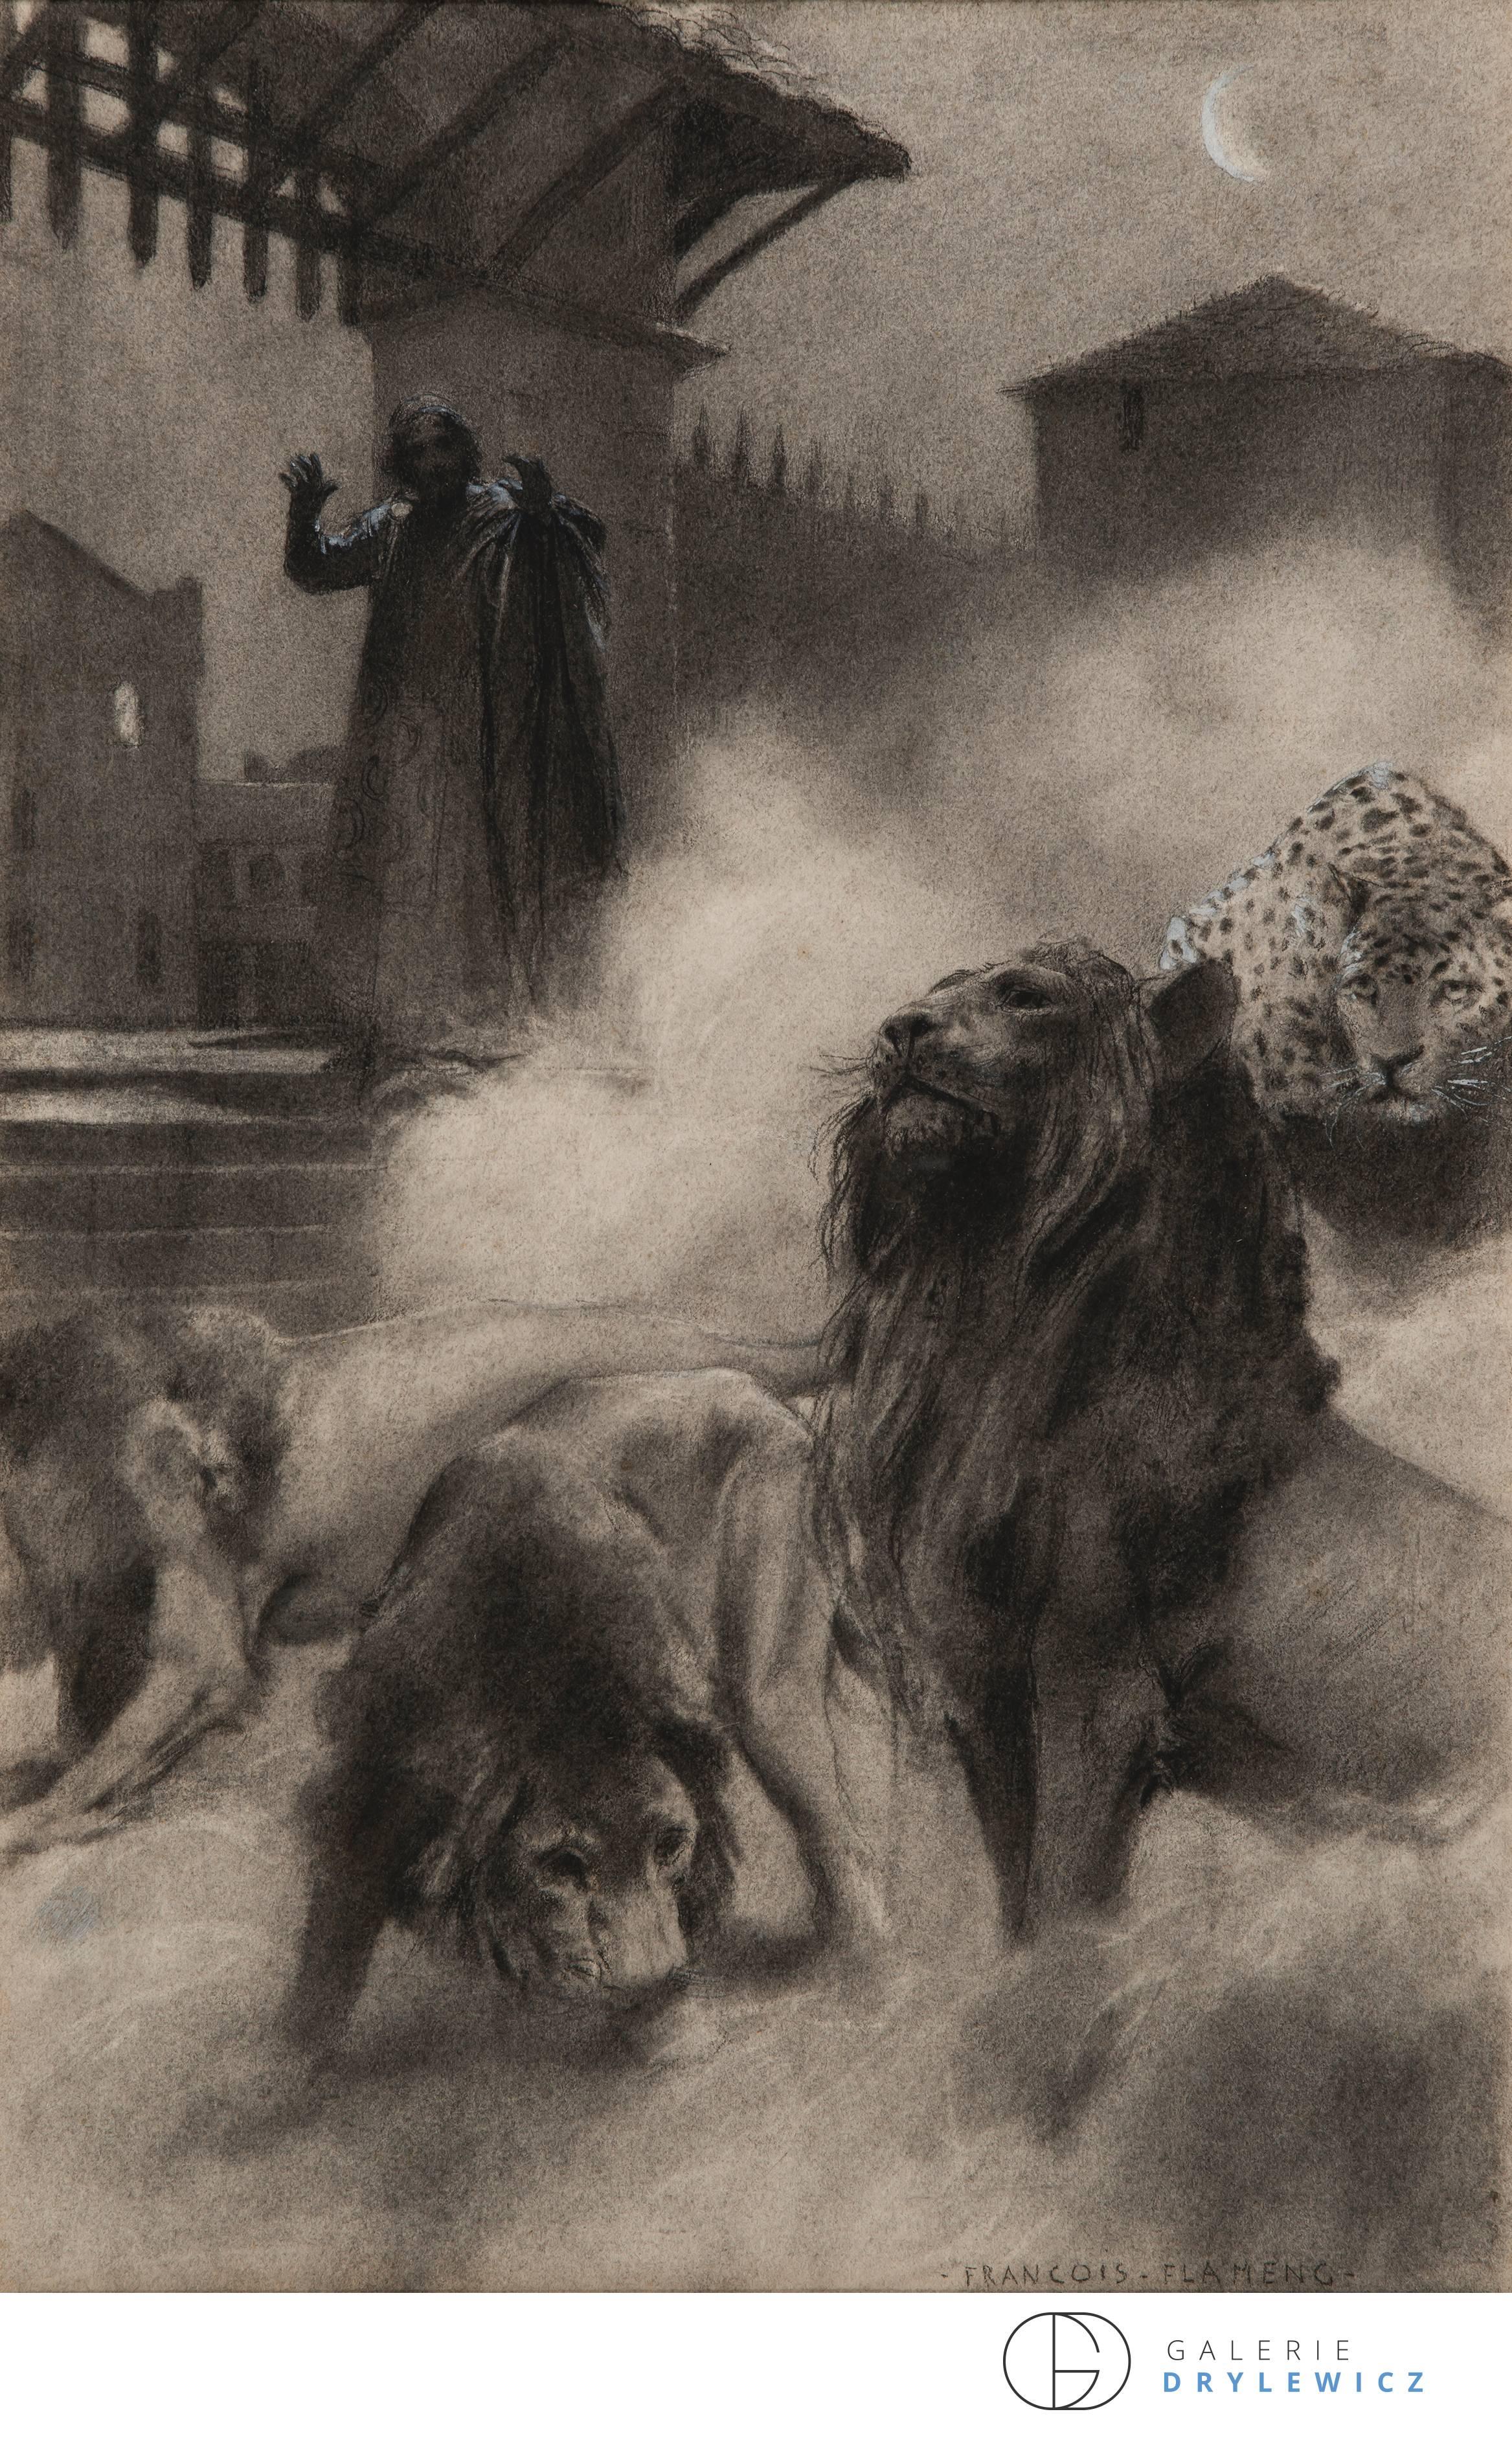 François Flameng Animal Art - Wild animals in the arena, circa 1900